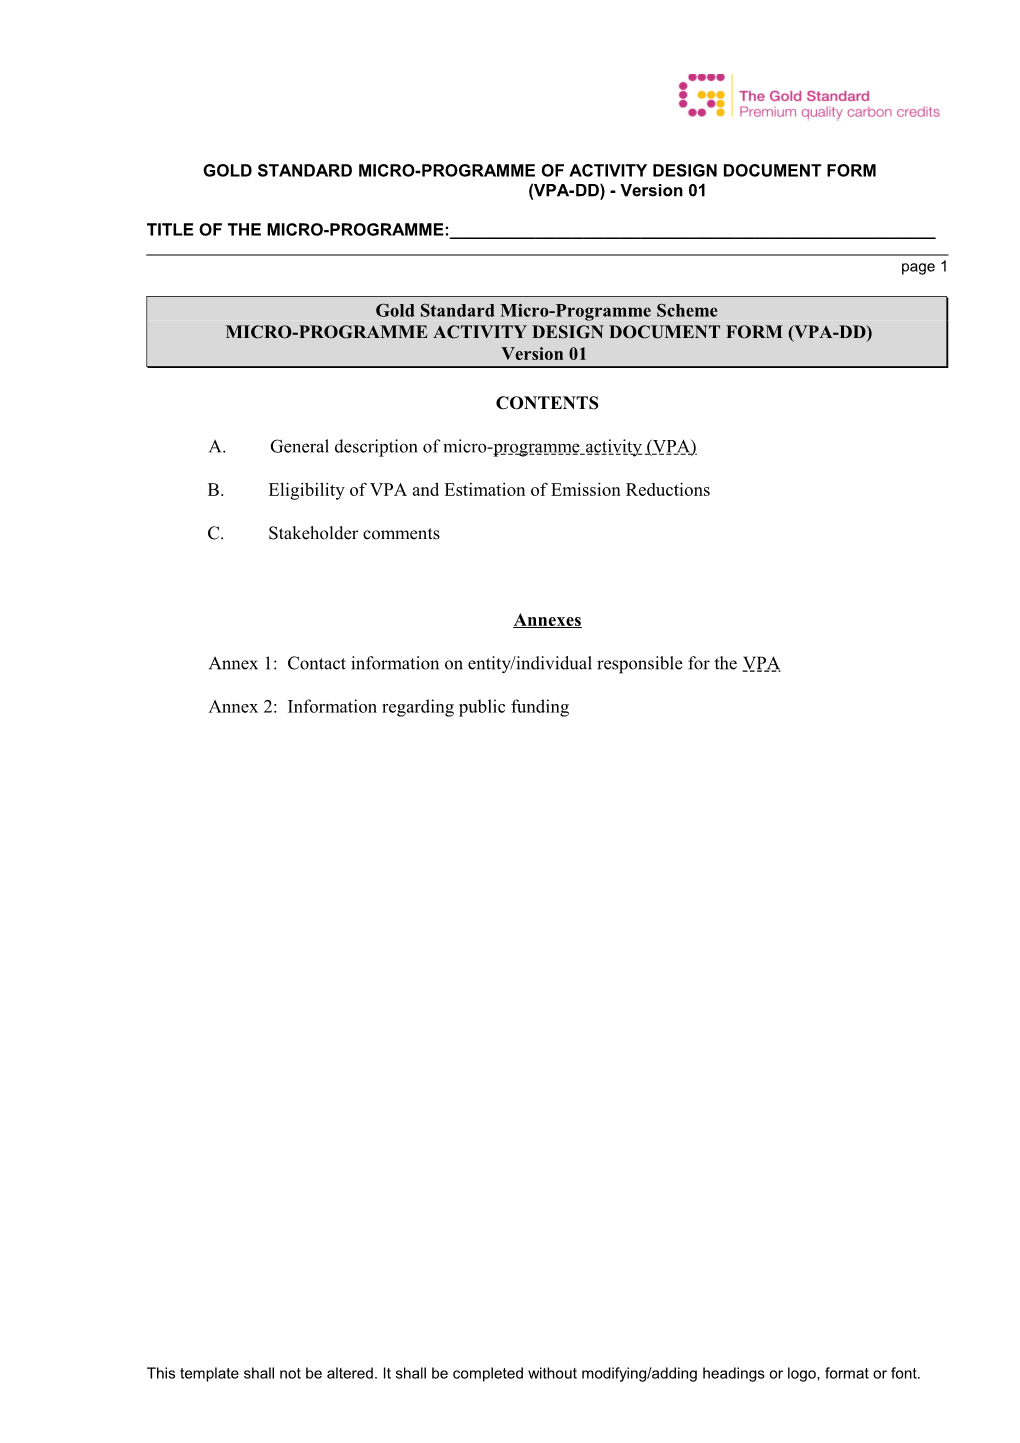 Small-Scale CDM Programme Activity Design Document Form (Poa-SSC-CPA-DD). (Version 01)